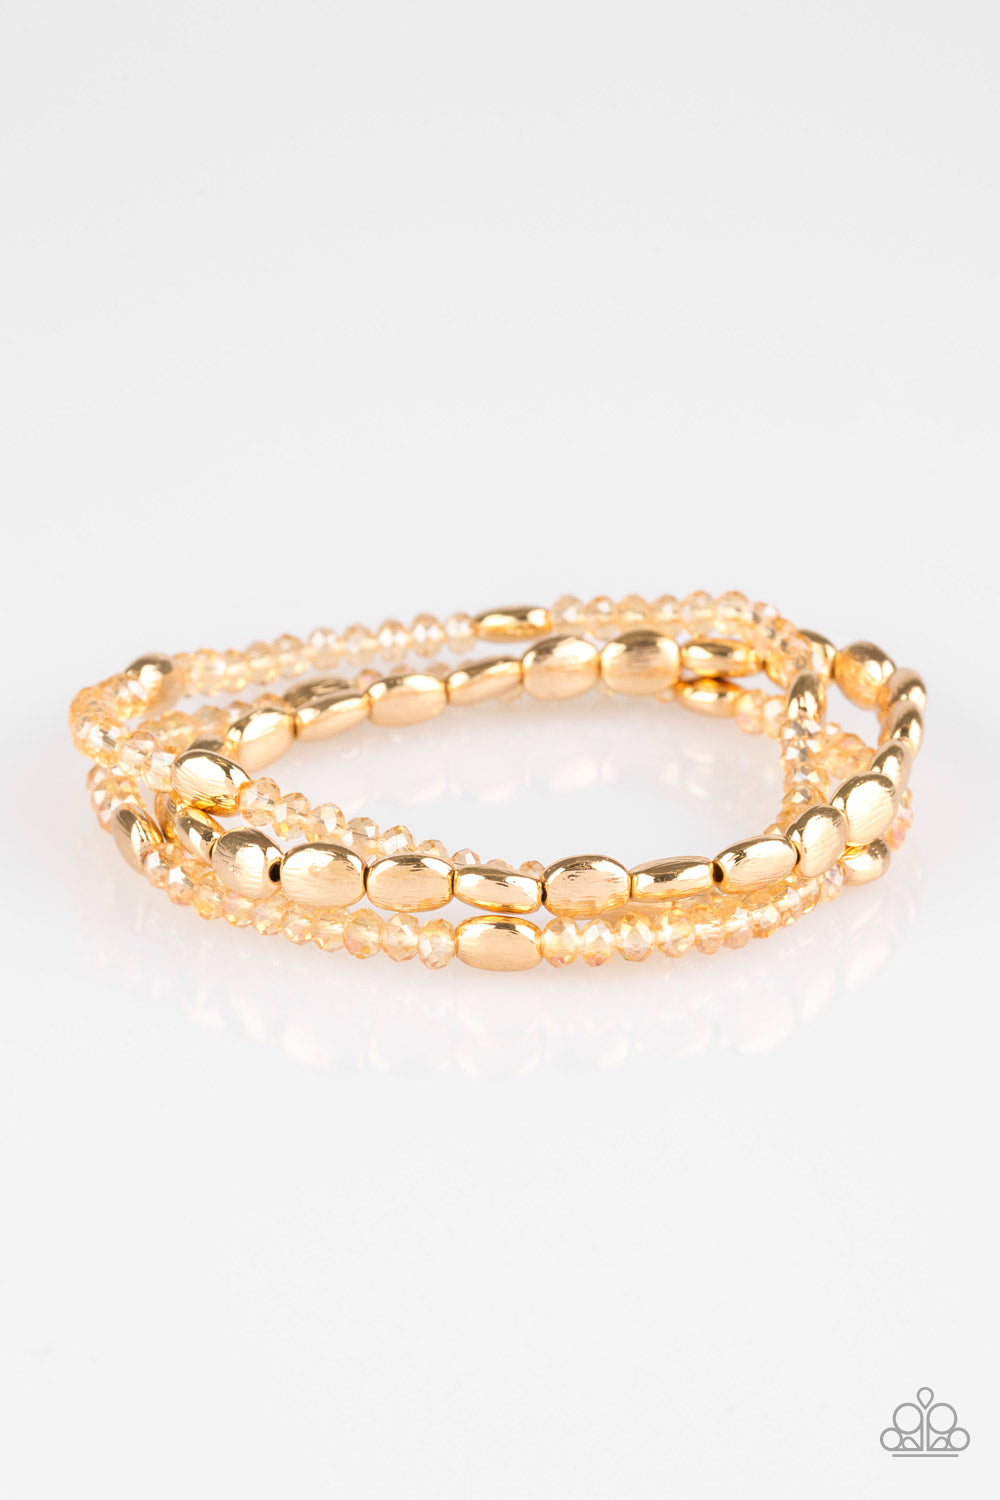 Paparazzi Accessories - Hello Beautiful #B465 - Gold Bracelet